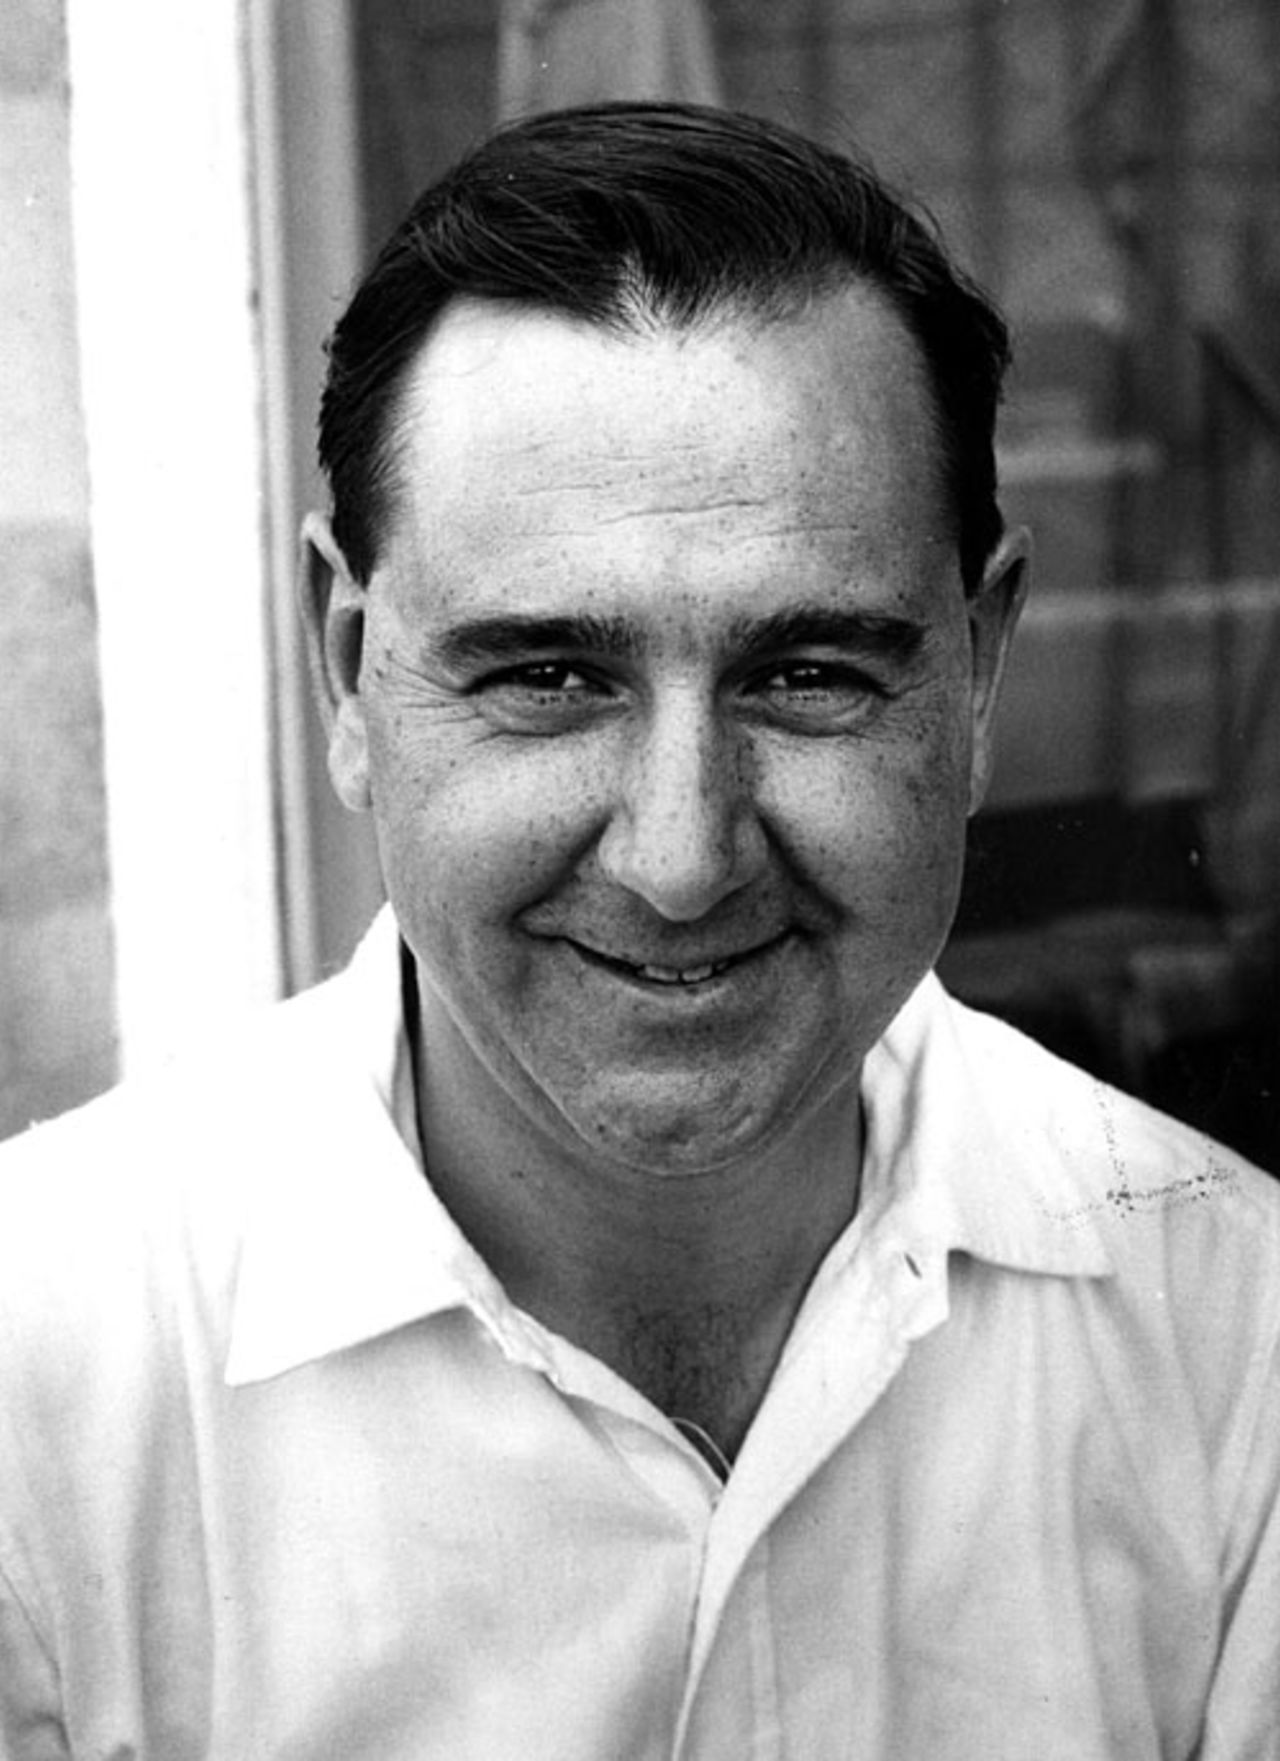 Portrait of Colin Cowdrey, August 16, 1968